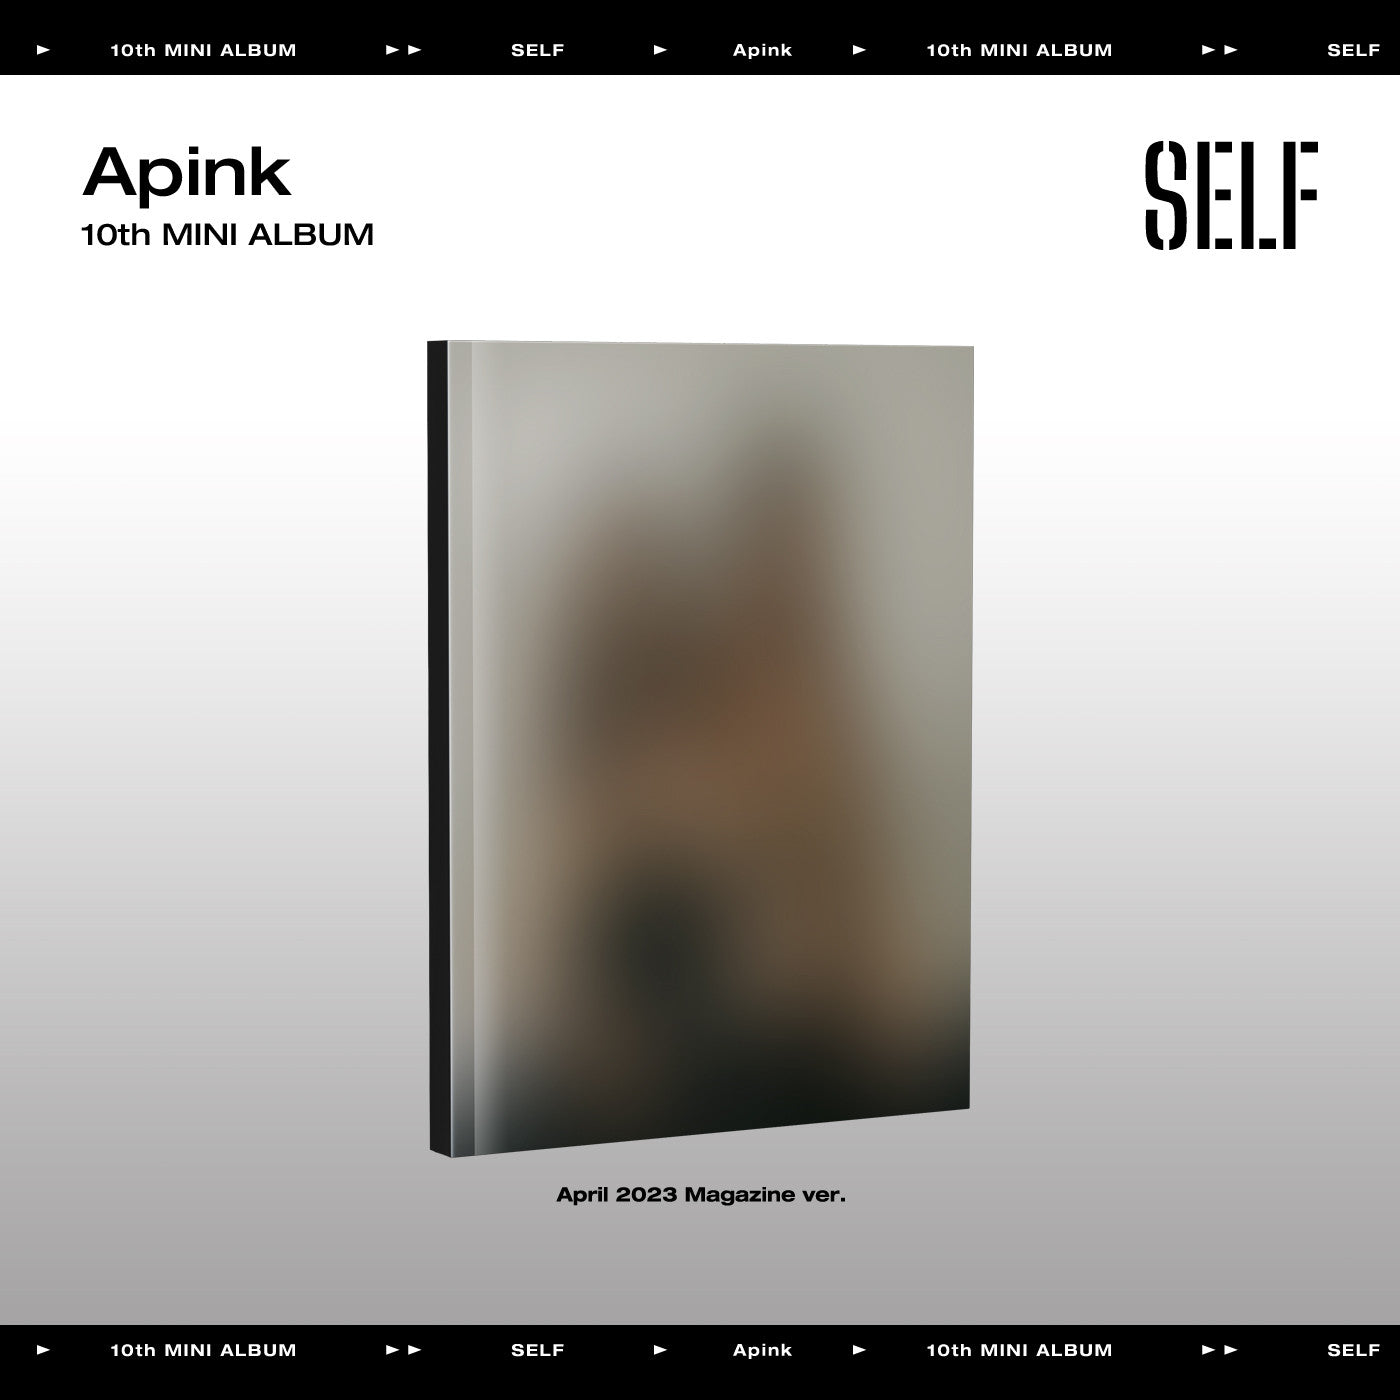 Apink - SELF (April 2023 Magazine Ver)